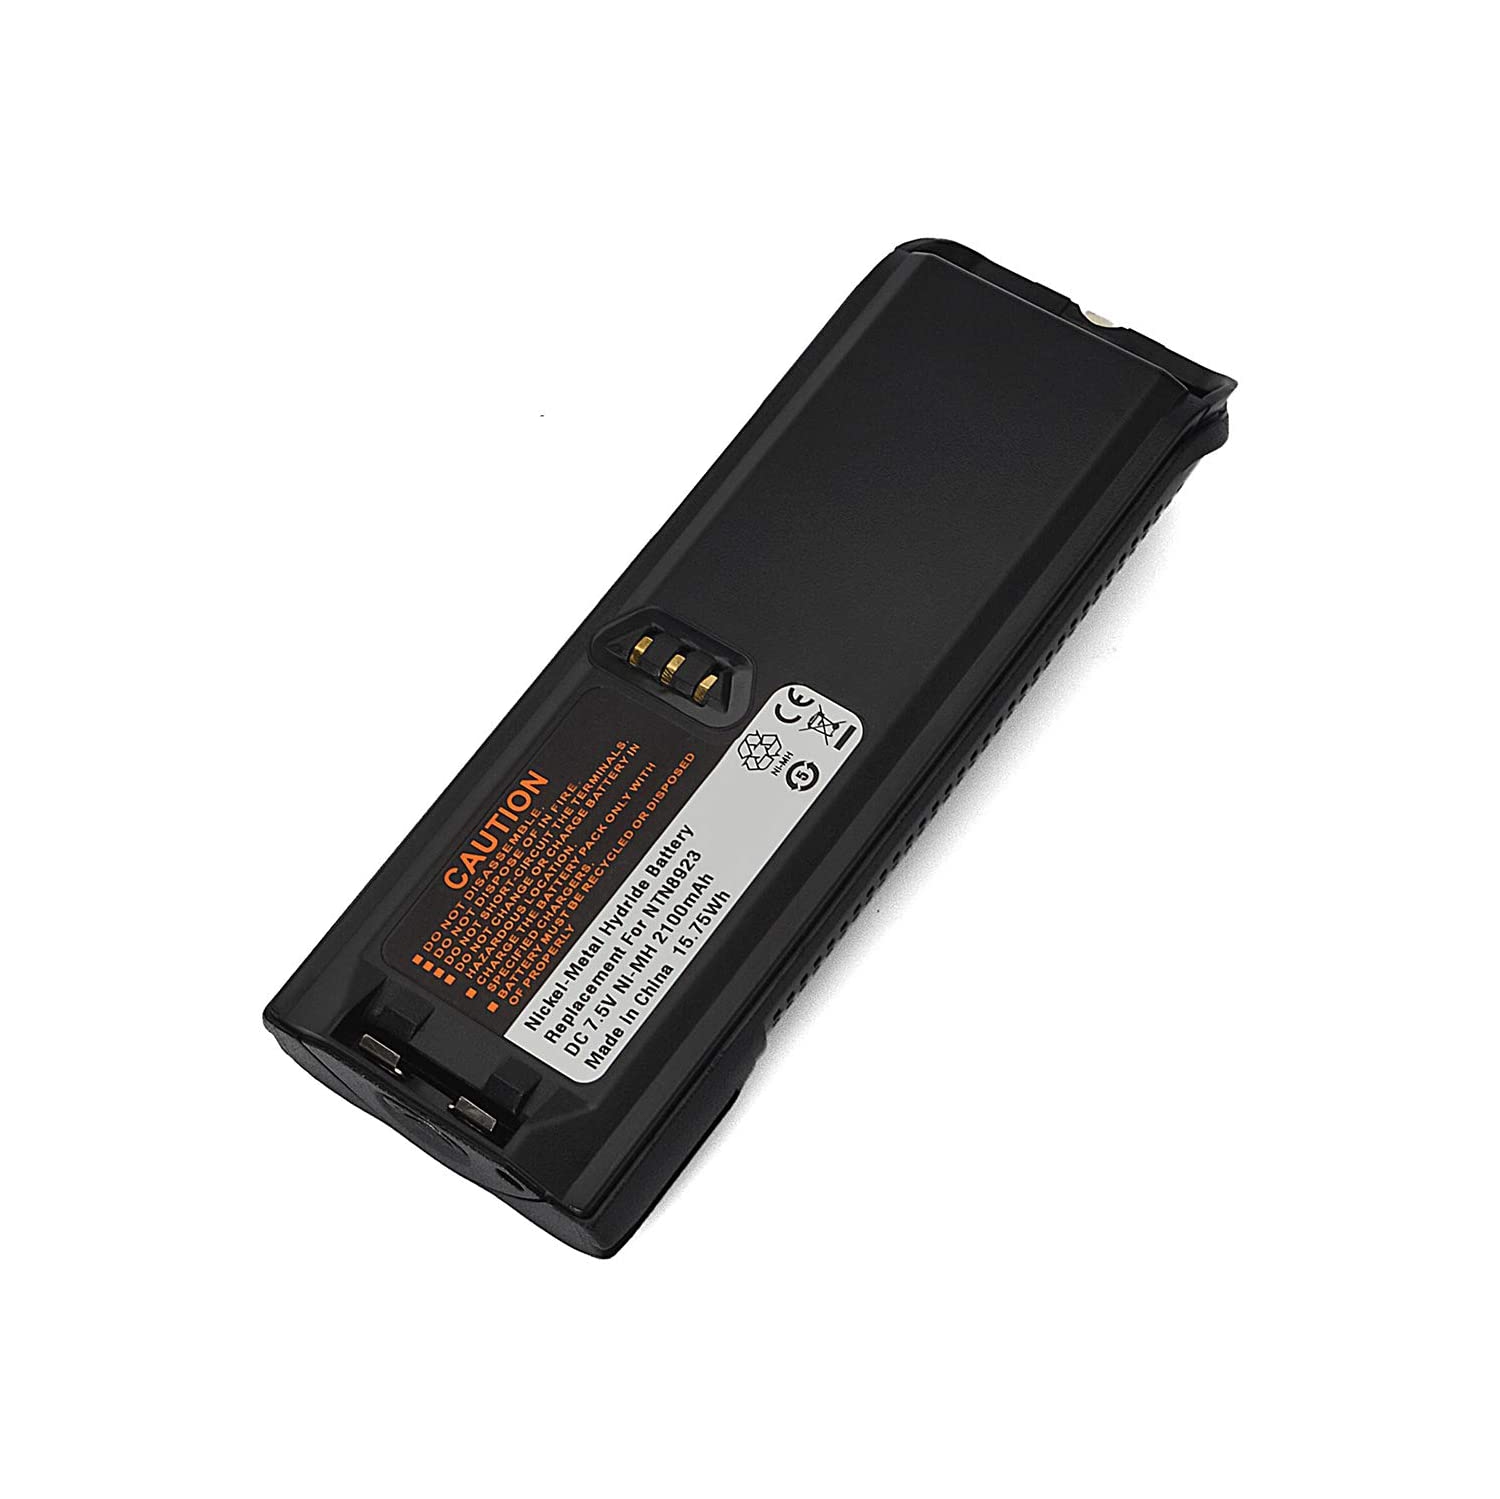 7.5V 2000mAh Walkie Talkie Rechargeable Battery For Motoro XTS3000, XTS3500, XTS5000, MTP200, MTP300 Ham Two Way Radio